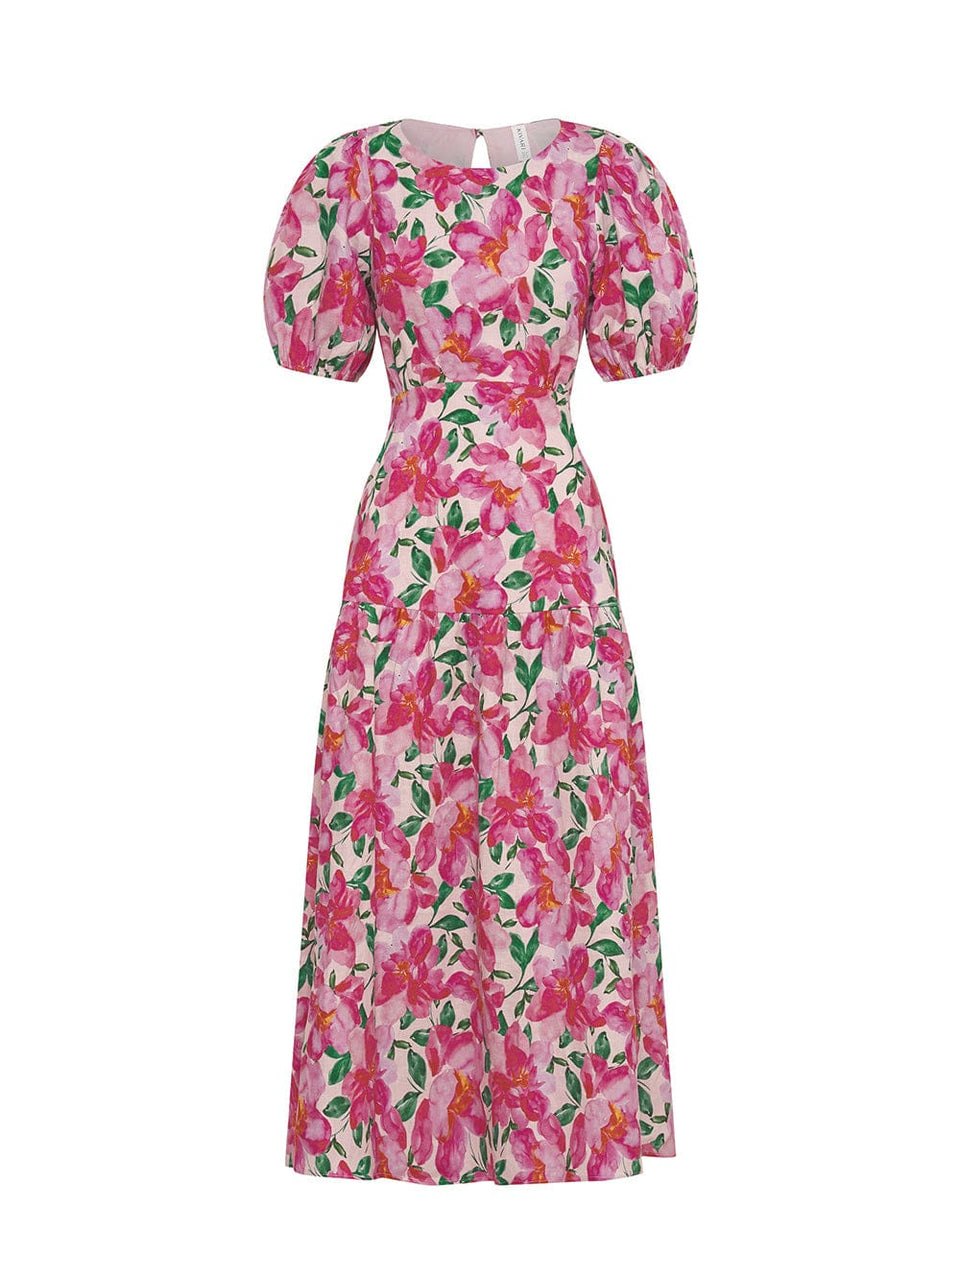 KIVARI Antonia Maxi Dress | Pink and Green Floral Dress